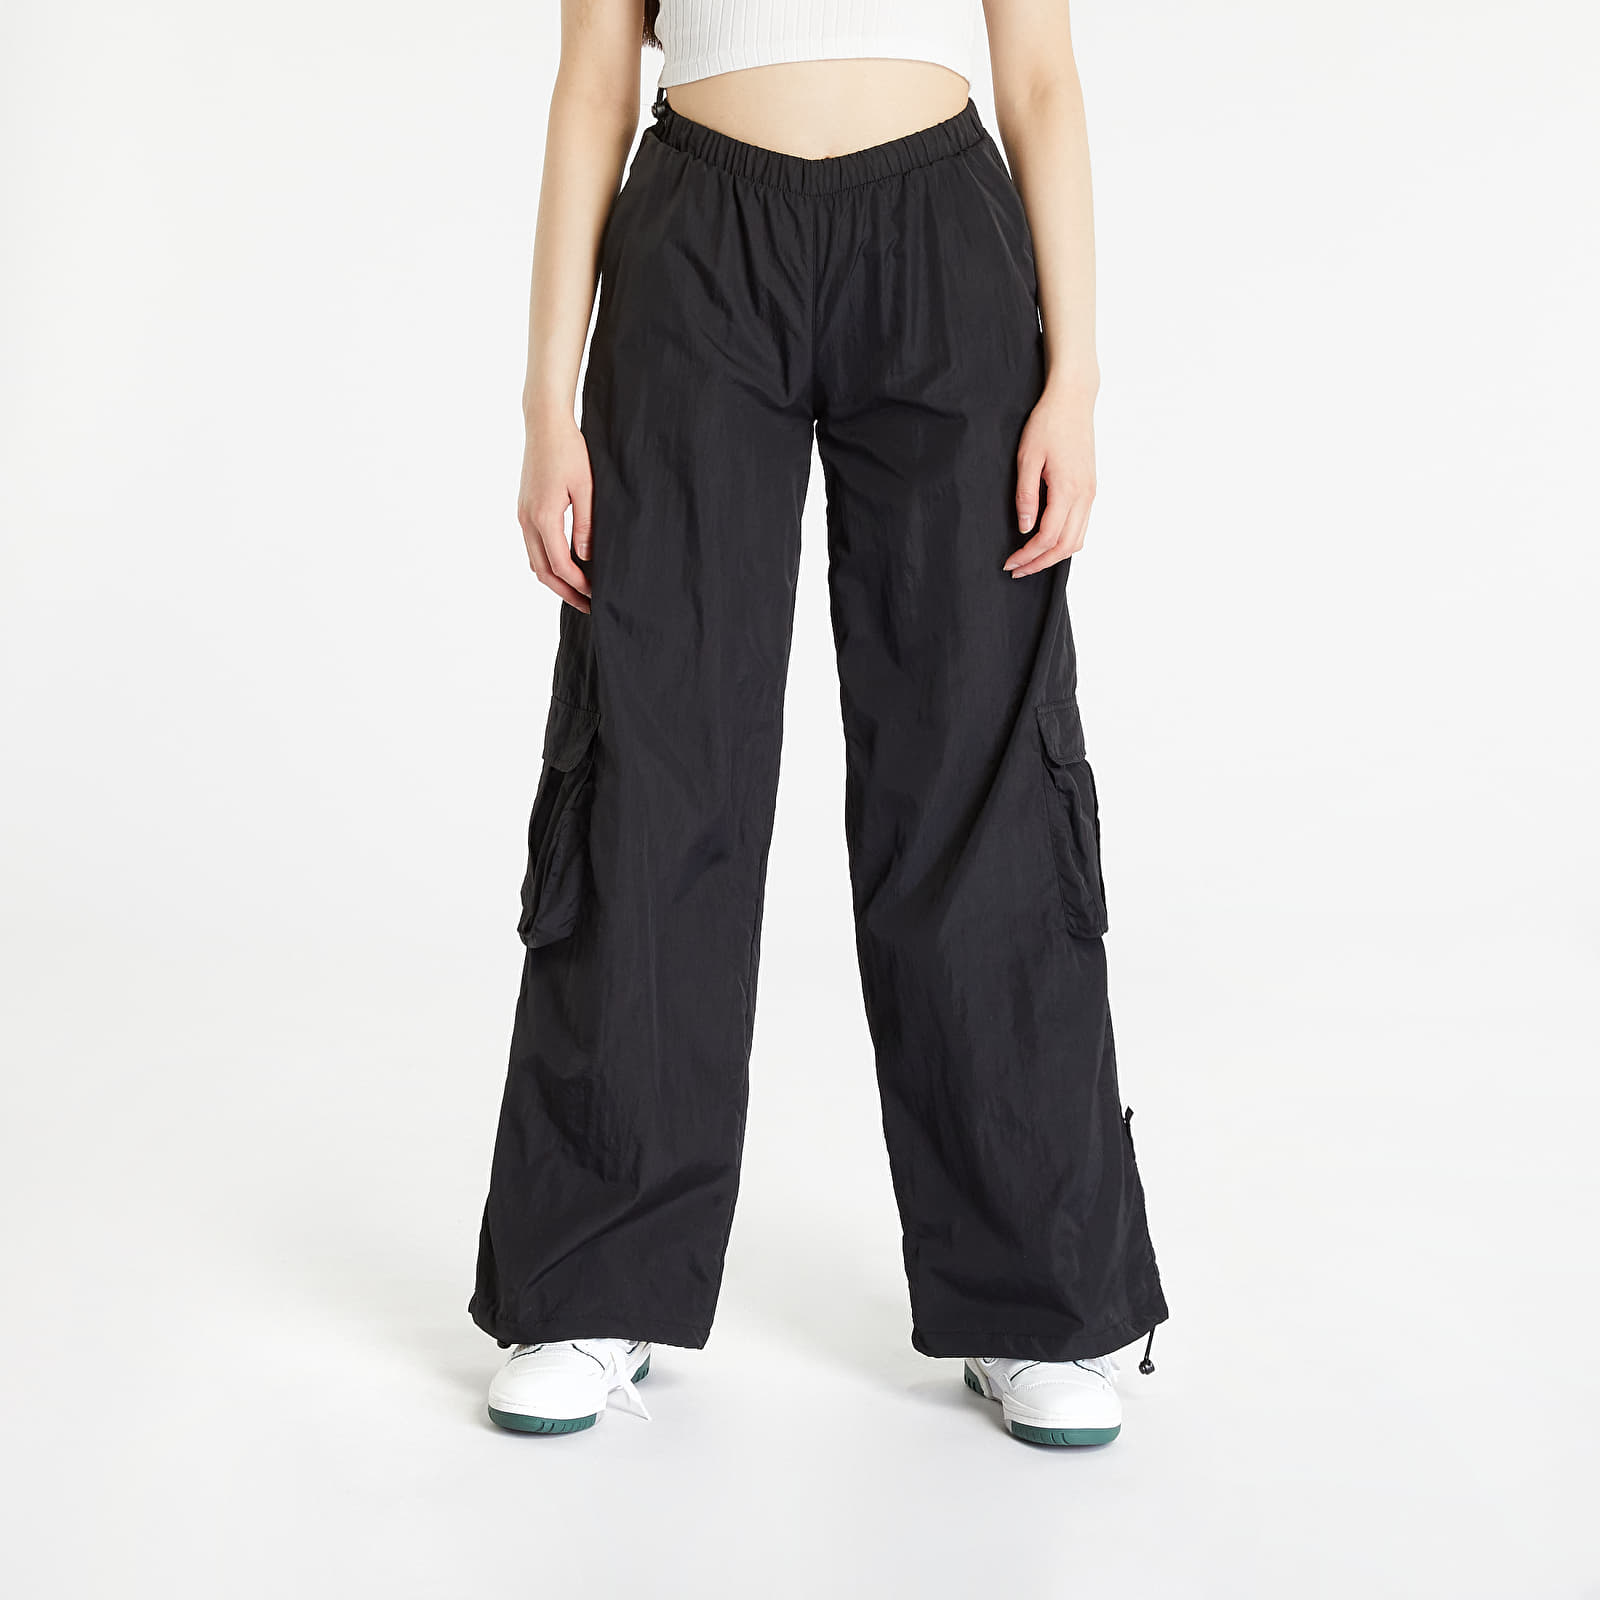 Nylon pants | Urban Queens Cargo Pants Ladies Classics Black Cargo Wide Crinkle